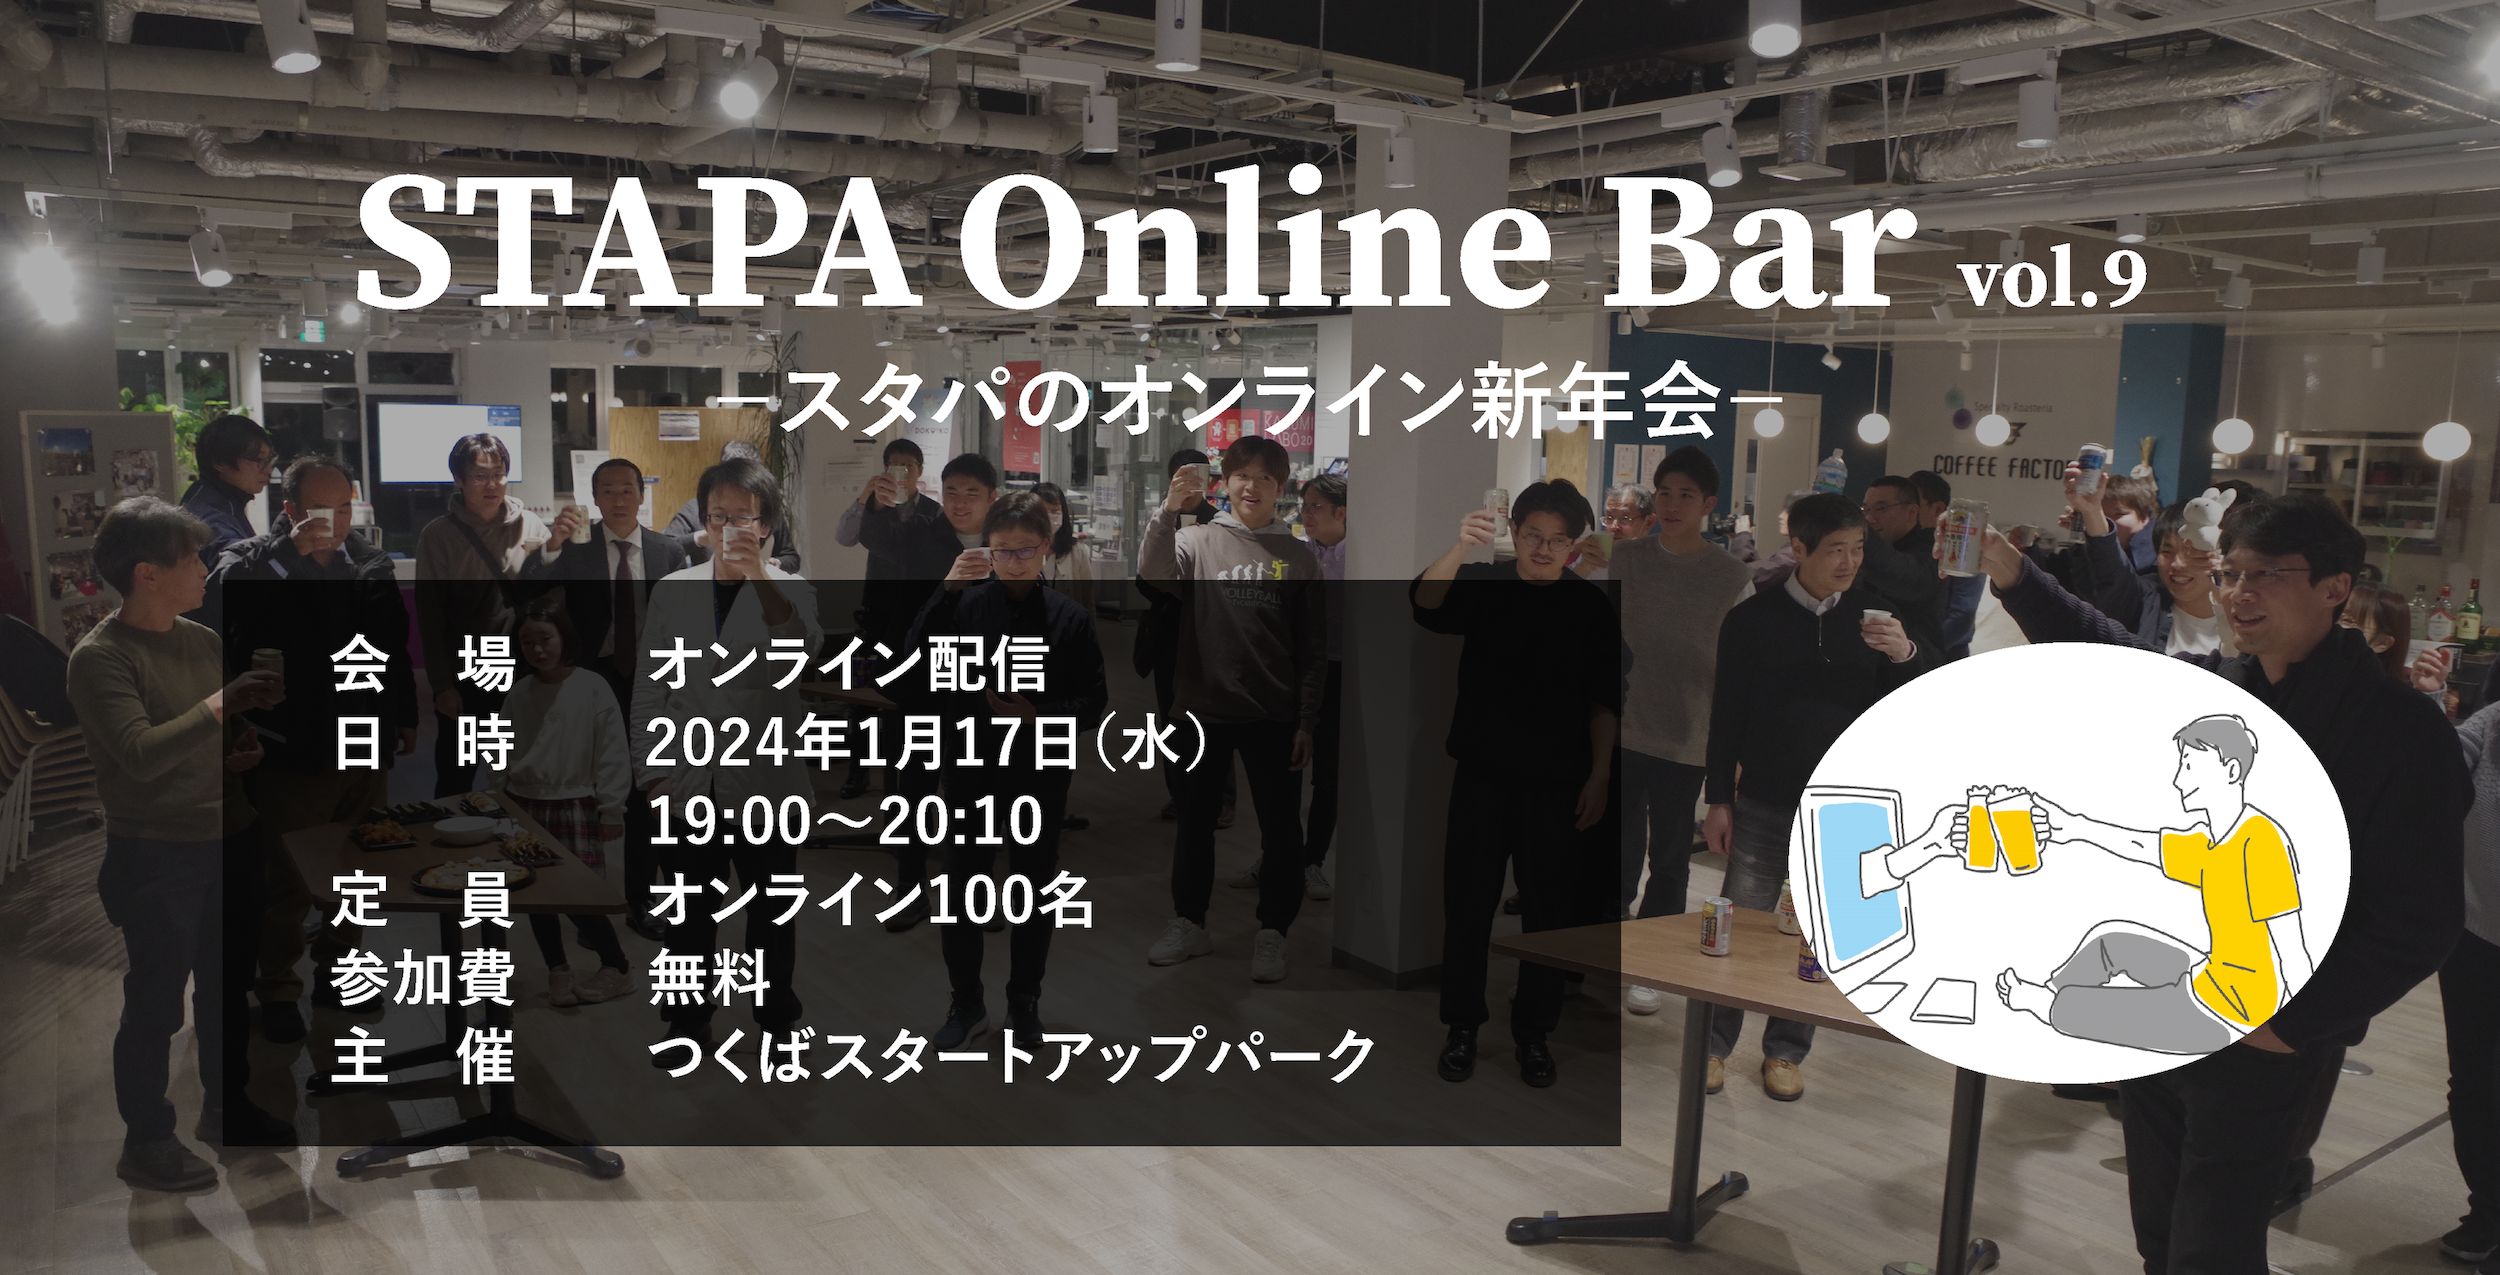 STAPA Online Bar vol.9 －スタパのオンライン新年会－